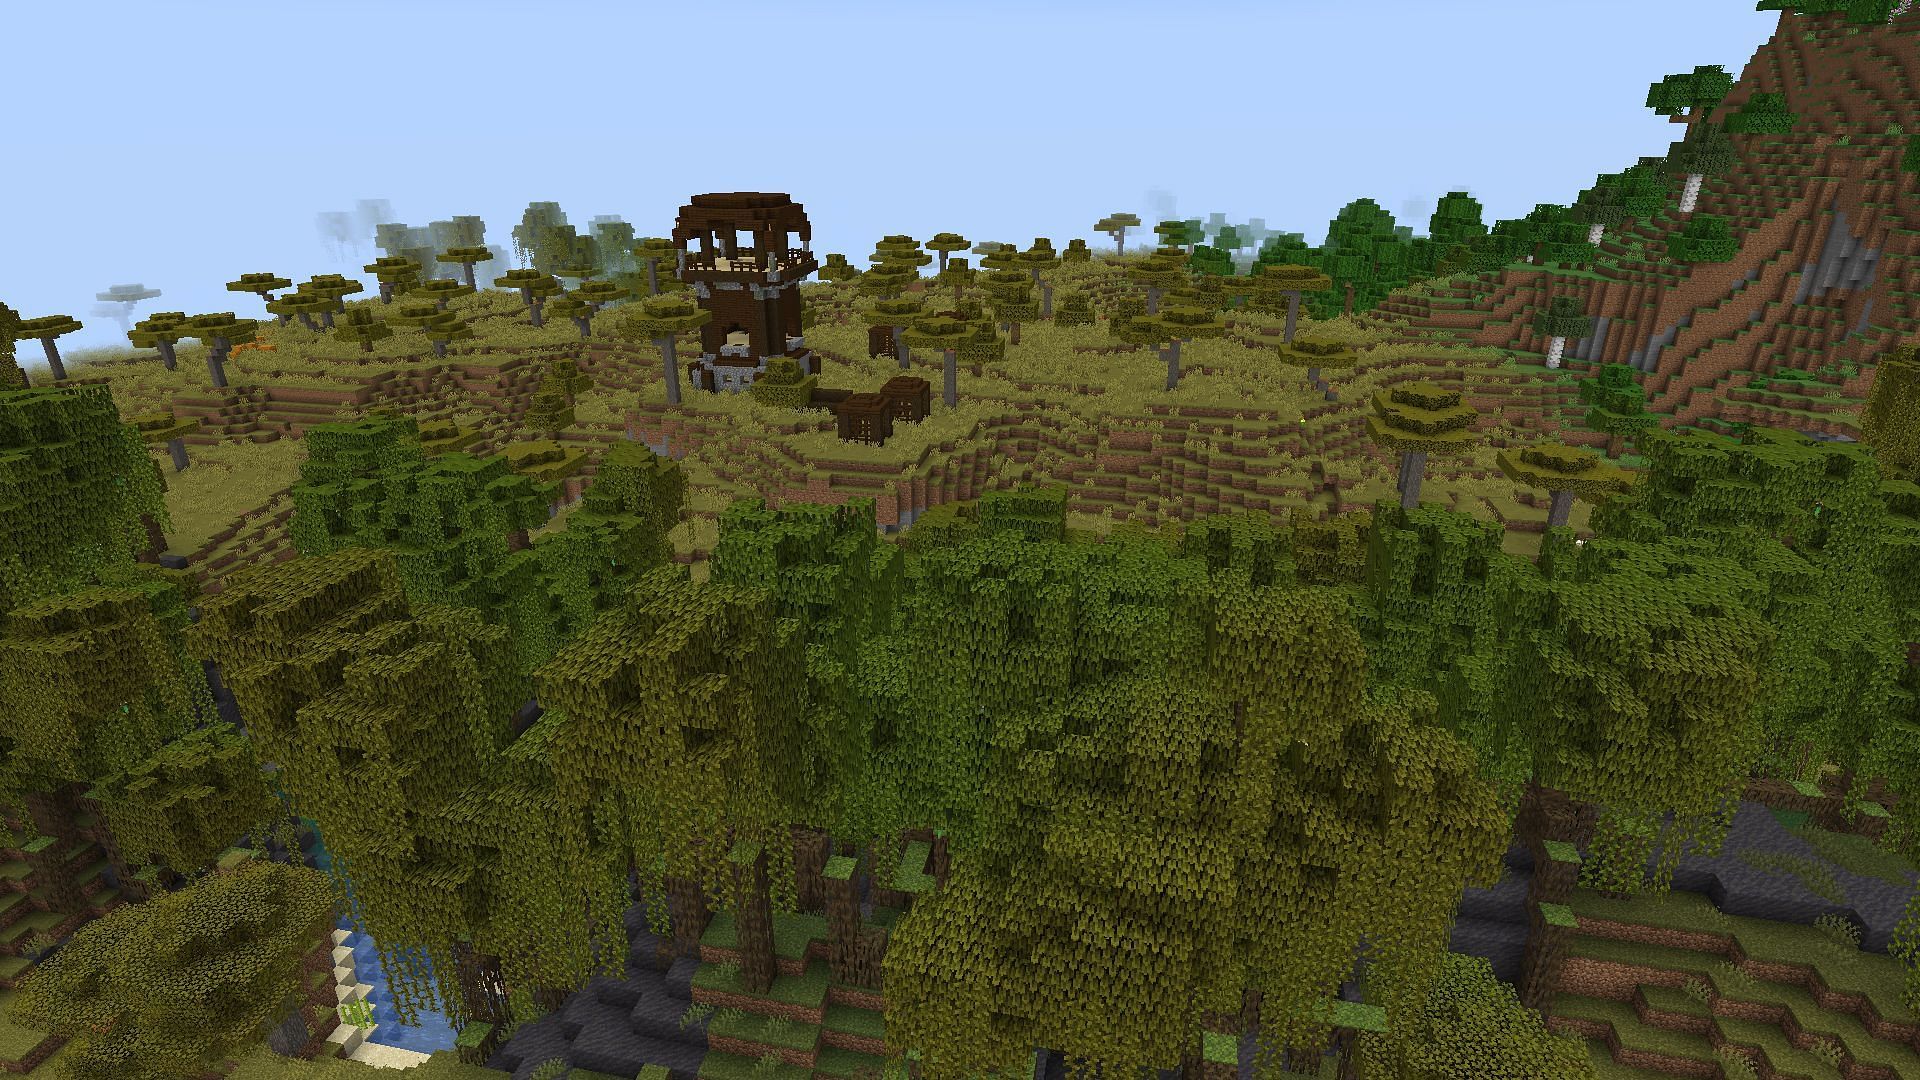 Minecraft seed: Mangrove swamp, jungle and mutated savanna close